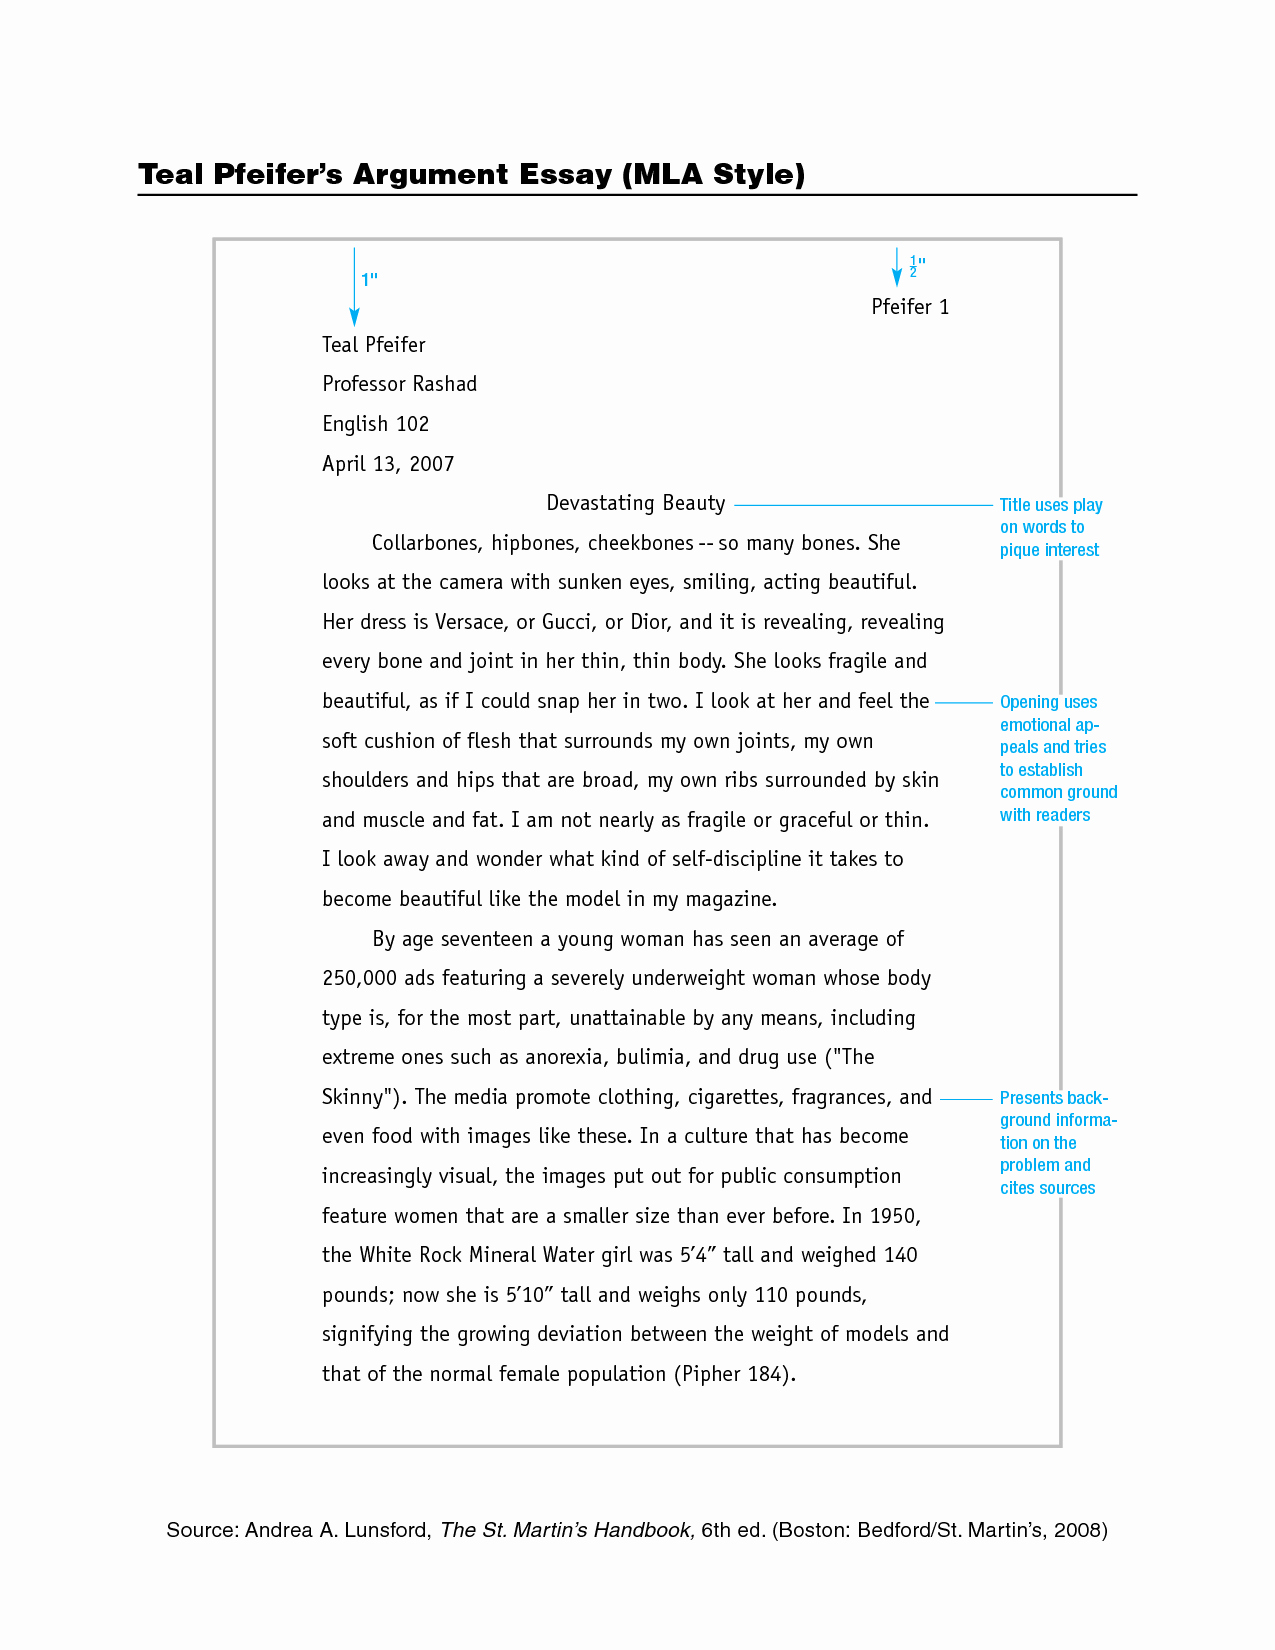 Mla format Word 2013 Template Luxury Best S Of College Essay Mla format Example Mla